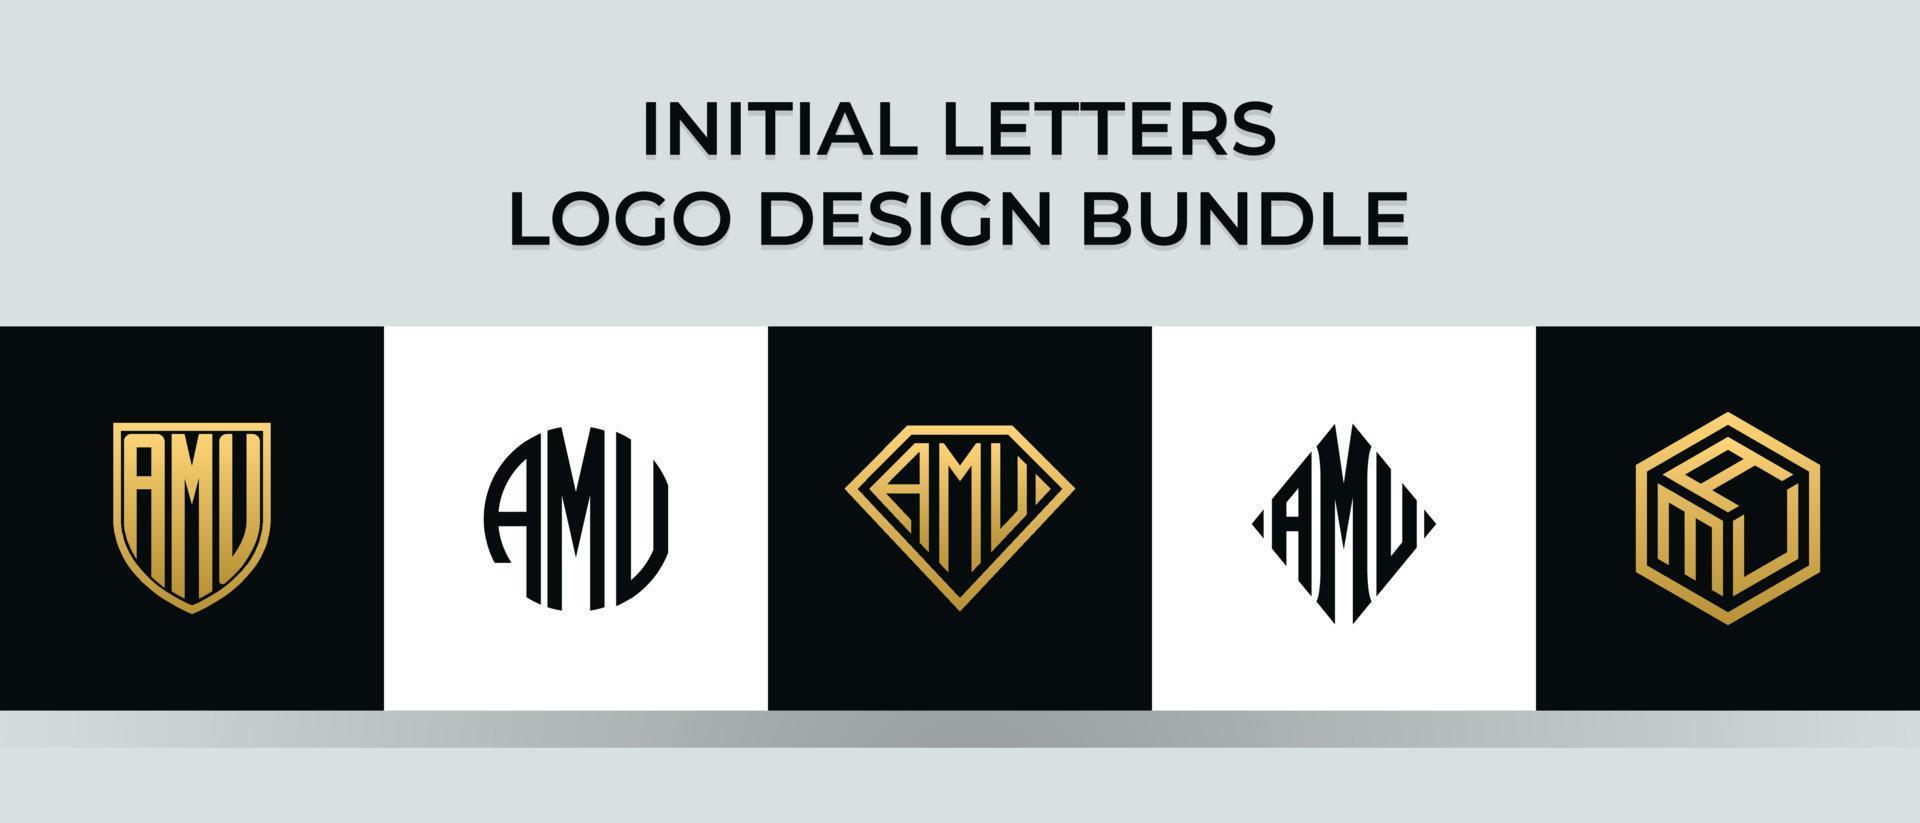 Anfangsbuchstaben Amu Logo Designs Bundle vektor